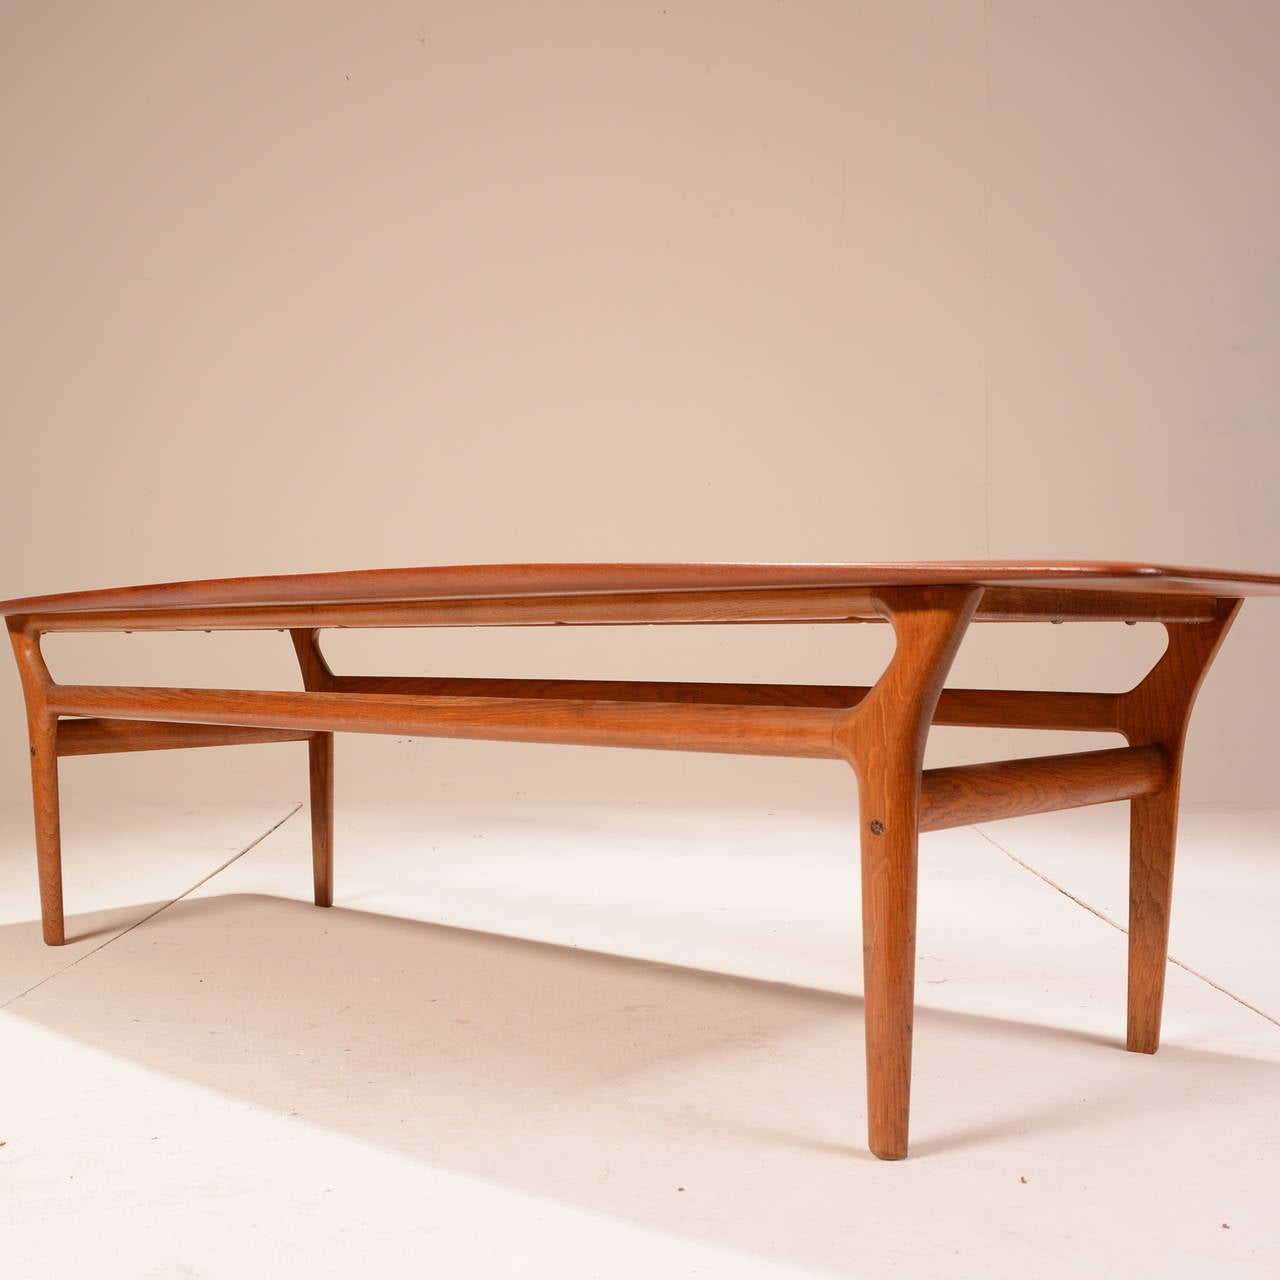 20th Century Solid Teak and Oak Coffee Table by Kurt Østervig for Jason Møbelfabrik